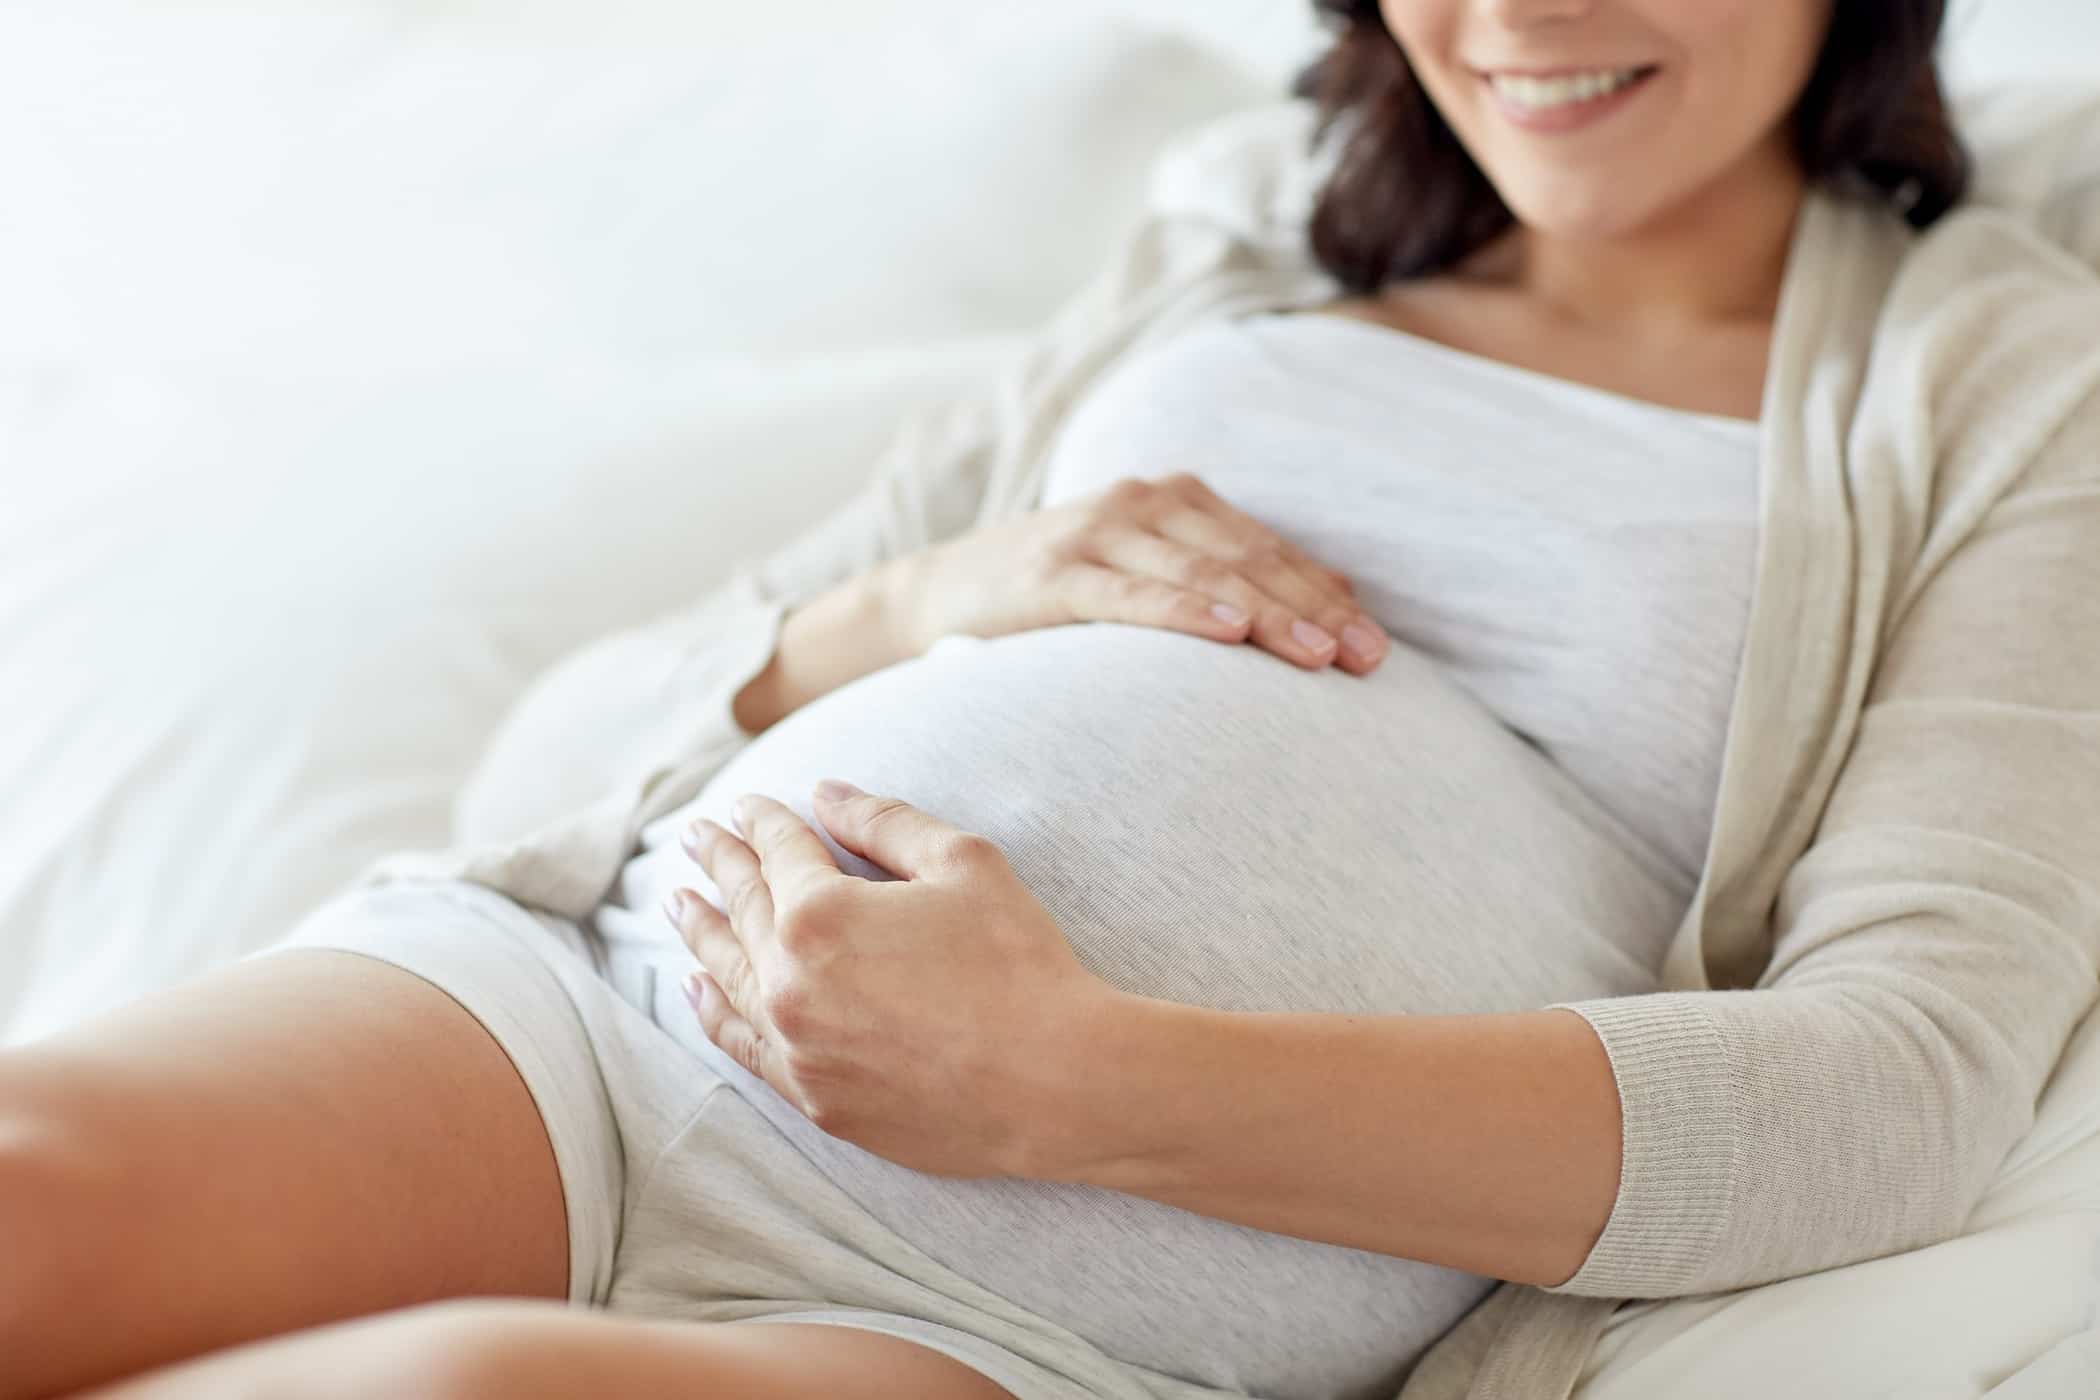 pembukaan persalinan merupakan tahap awal dari proses melahirkan bayi